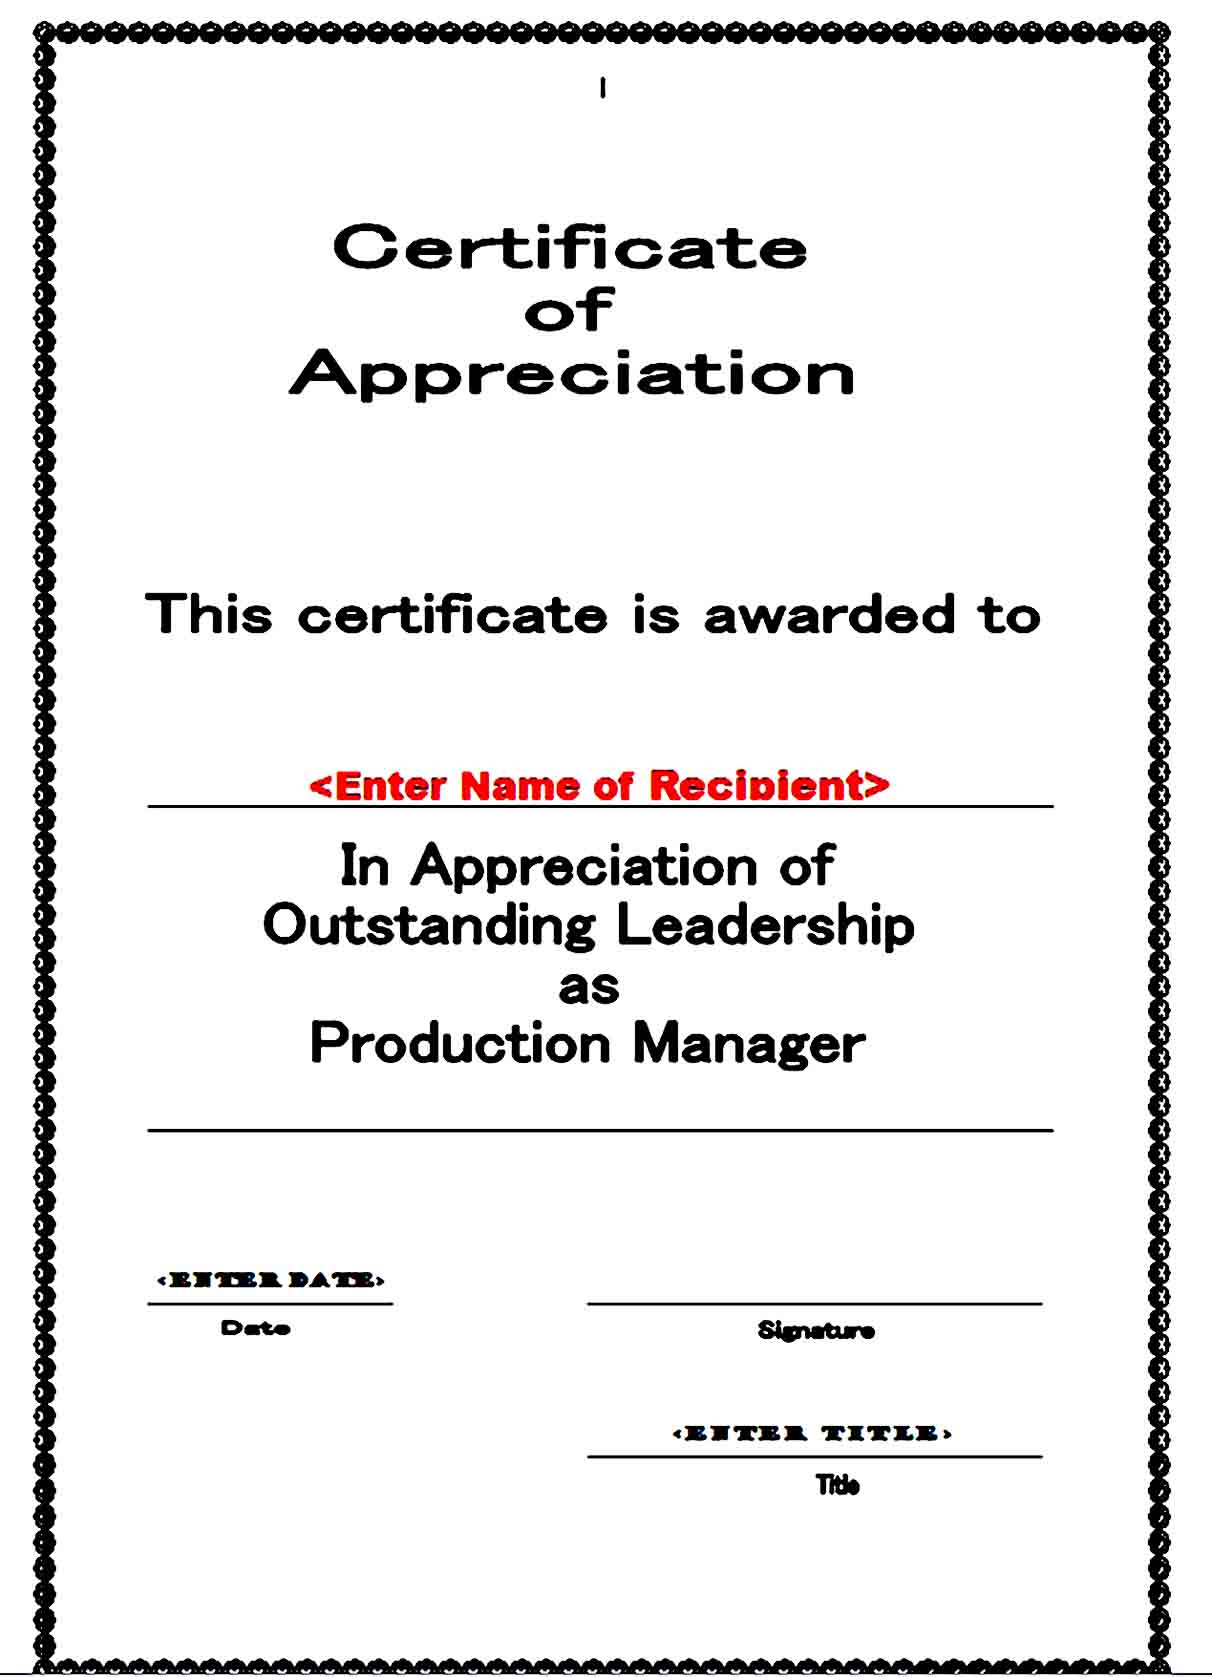 Certificate of Appreciation 11